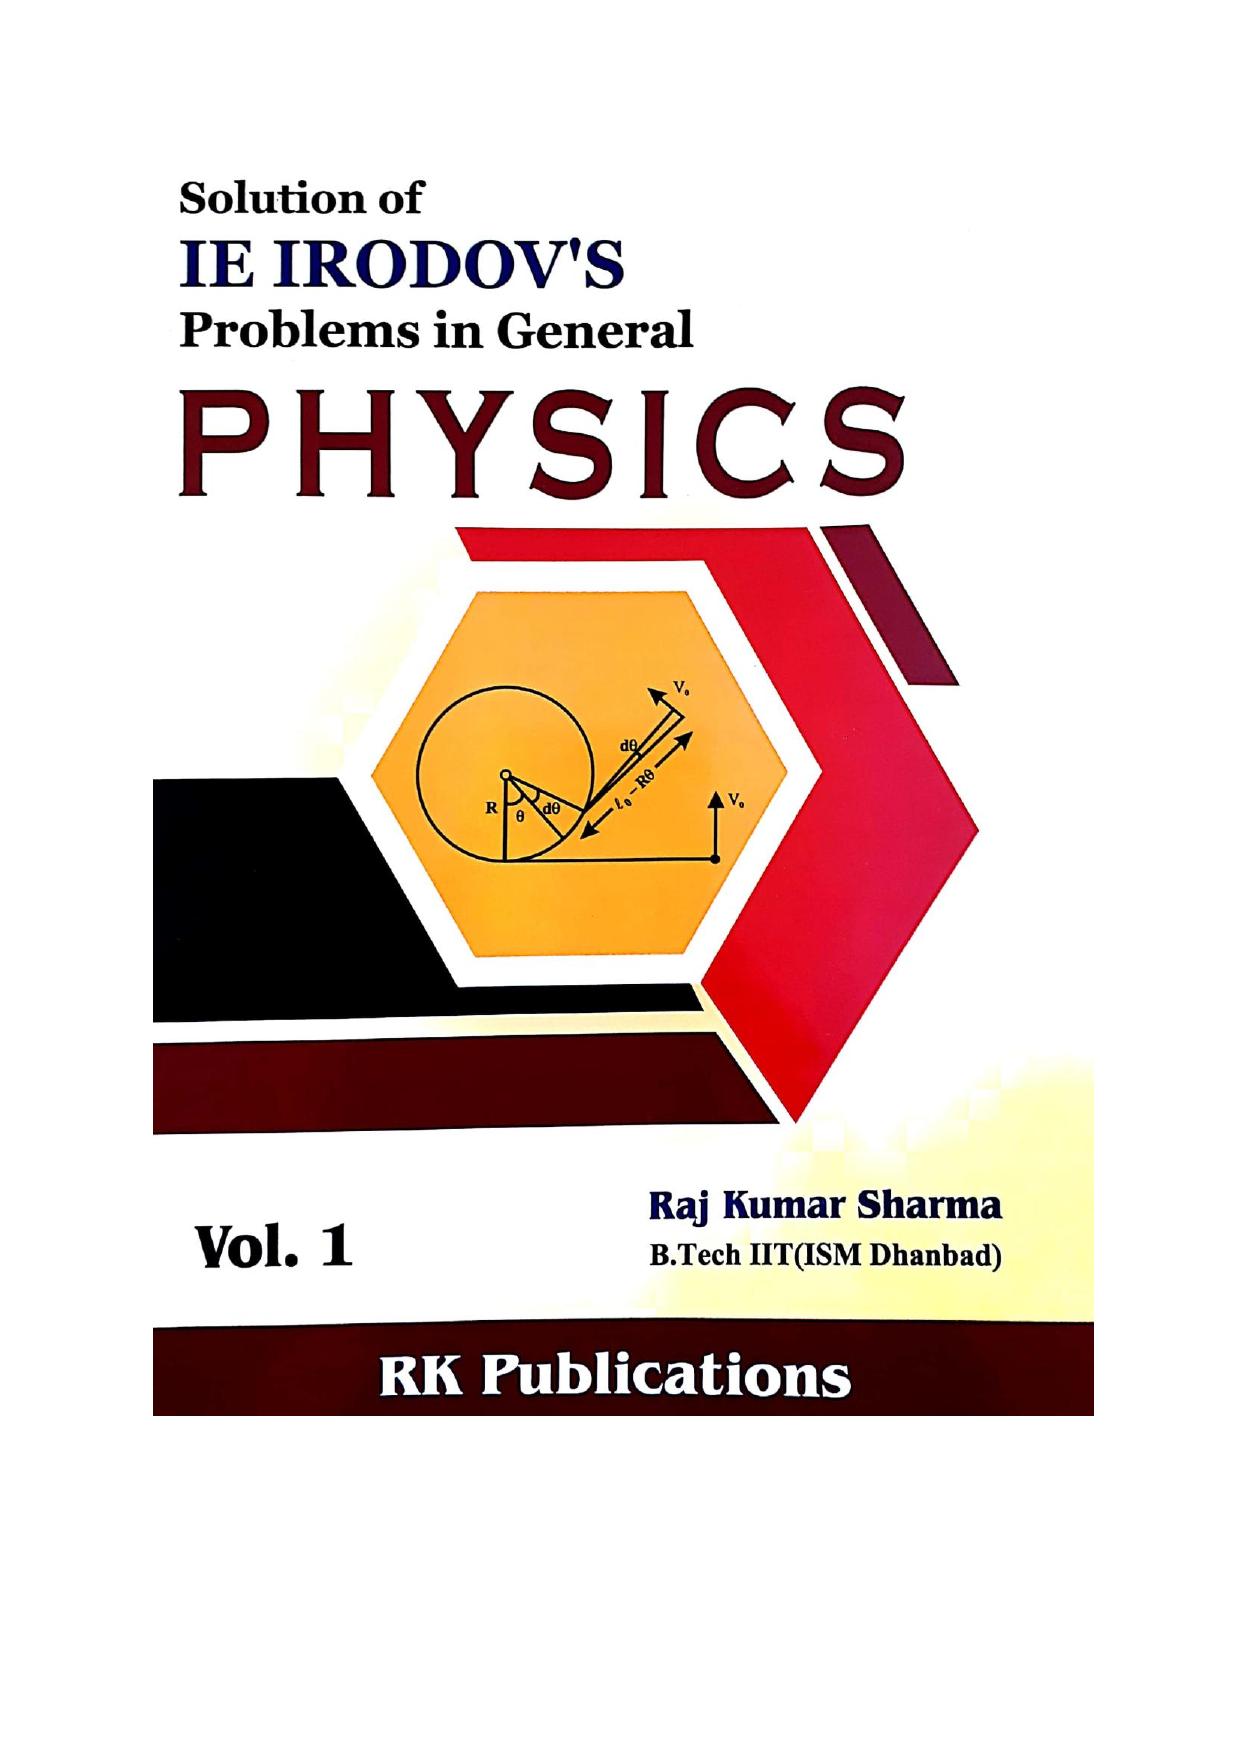 Solution of I E Irodov s Problems in General Physics Vol 1 Raj Kumar Sharma B Tech IIT ( ISM ) Dhanbad RK Publications for IIT JEE Physics Olympiad  2018